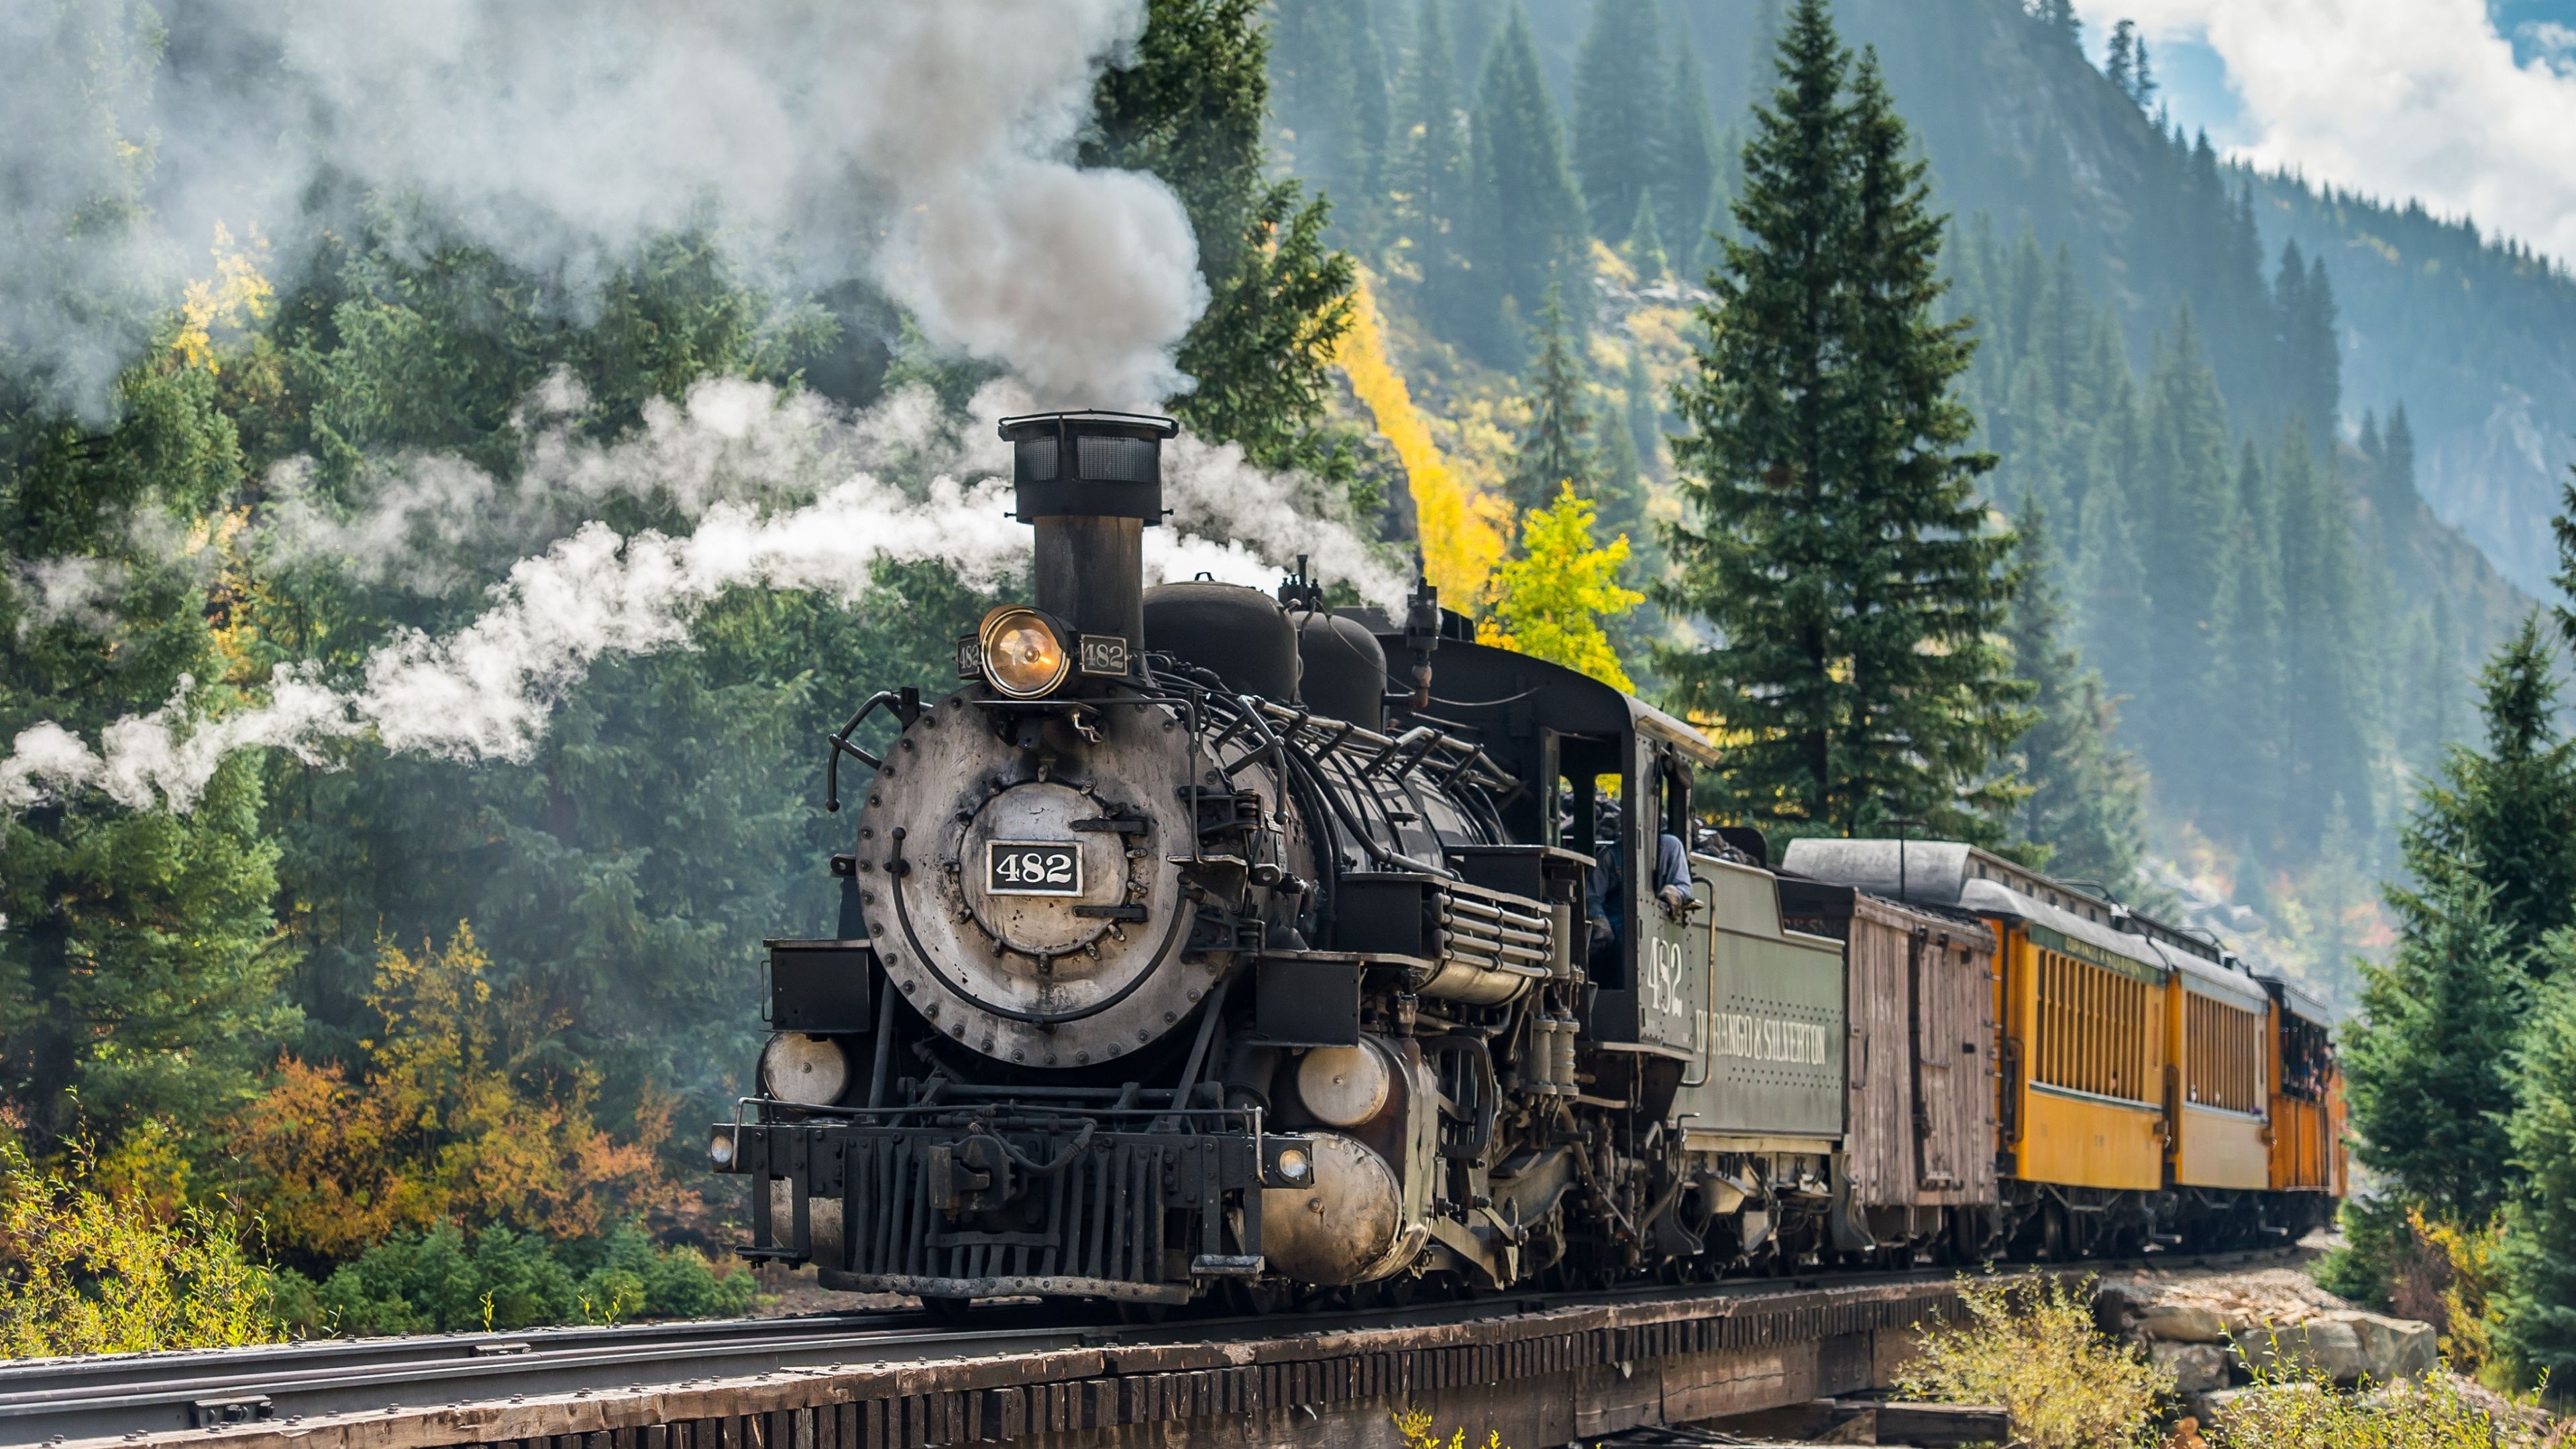 Download 3840x2160 wallpaper steam engine, train, forest, railroad